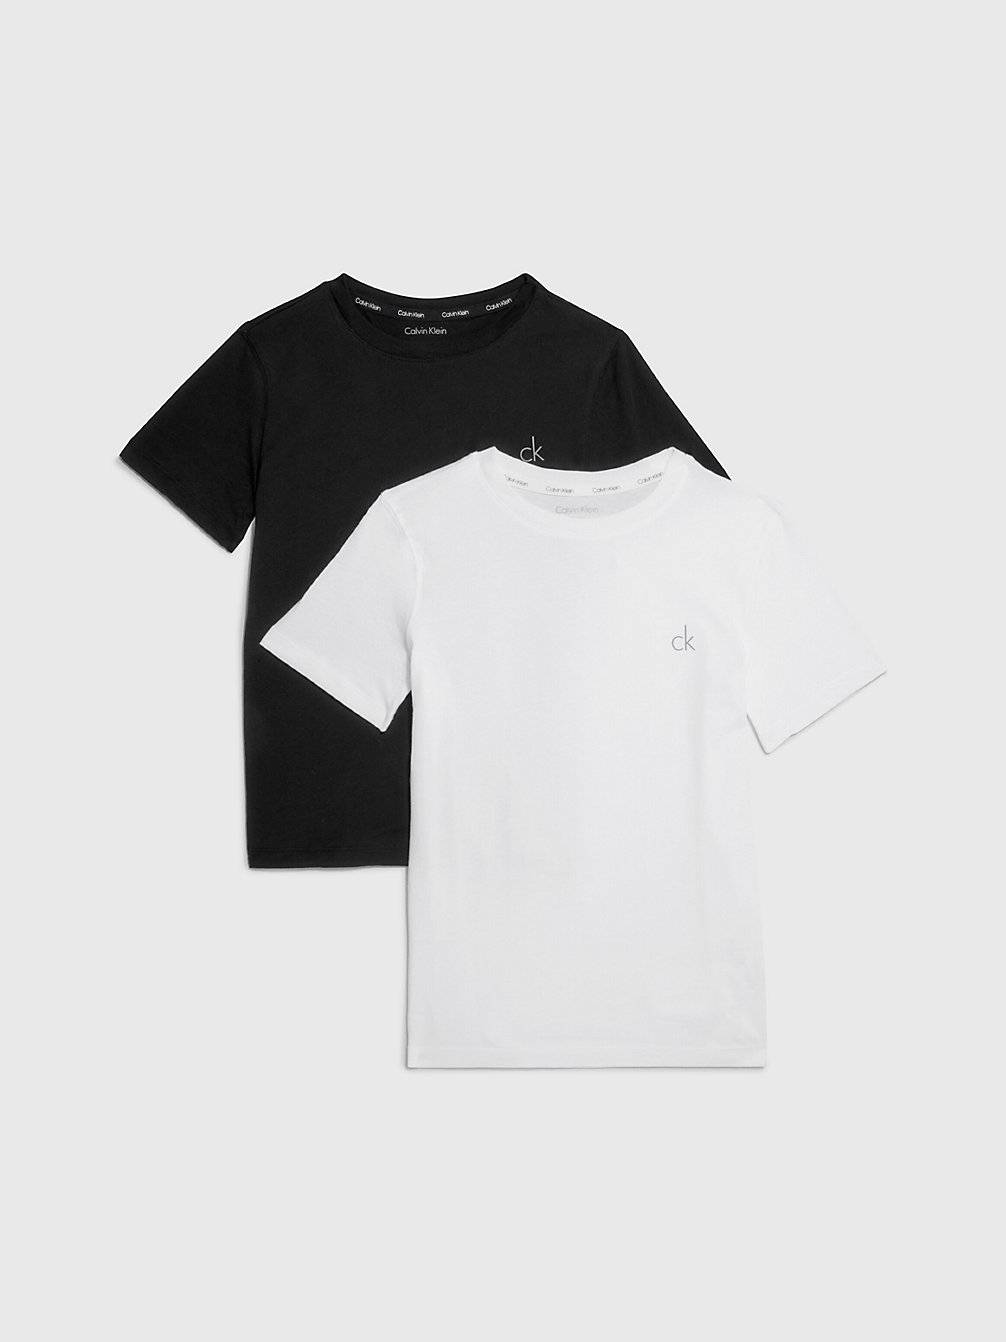 WHITE / BLACK > Zestaw 2 T-Shirtów Chłopięcych Po Domu - Modern Cotton > undefined boys - Calvin Klein